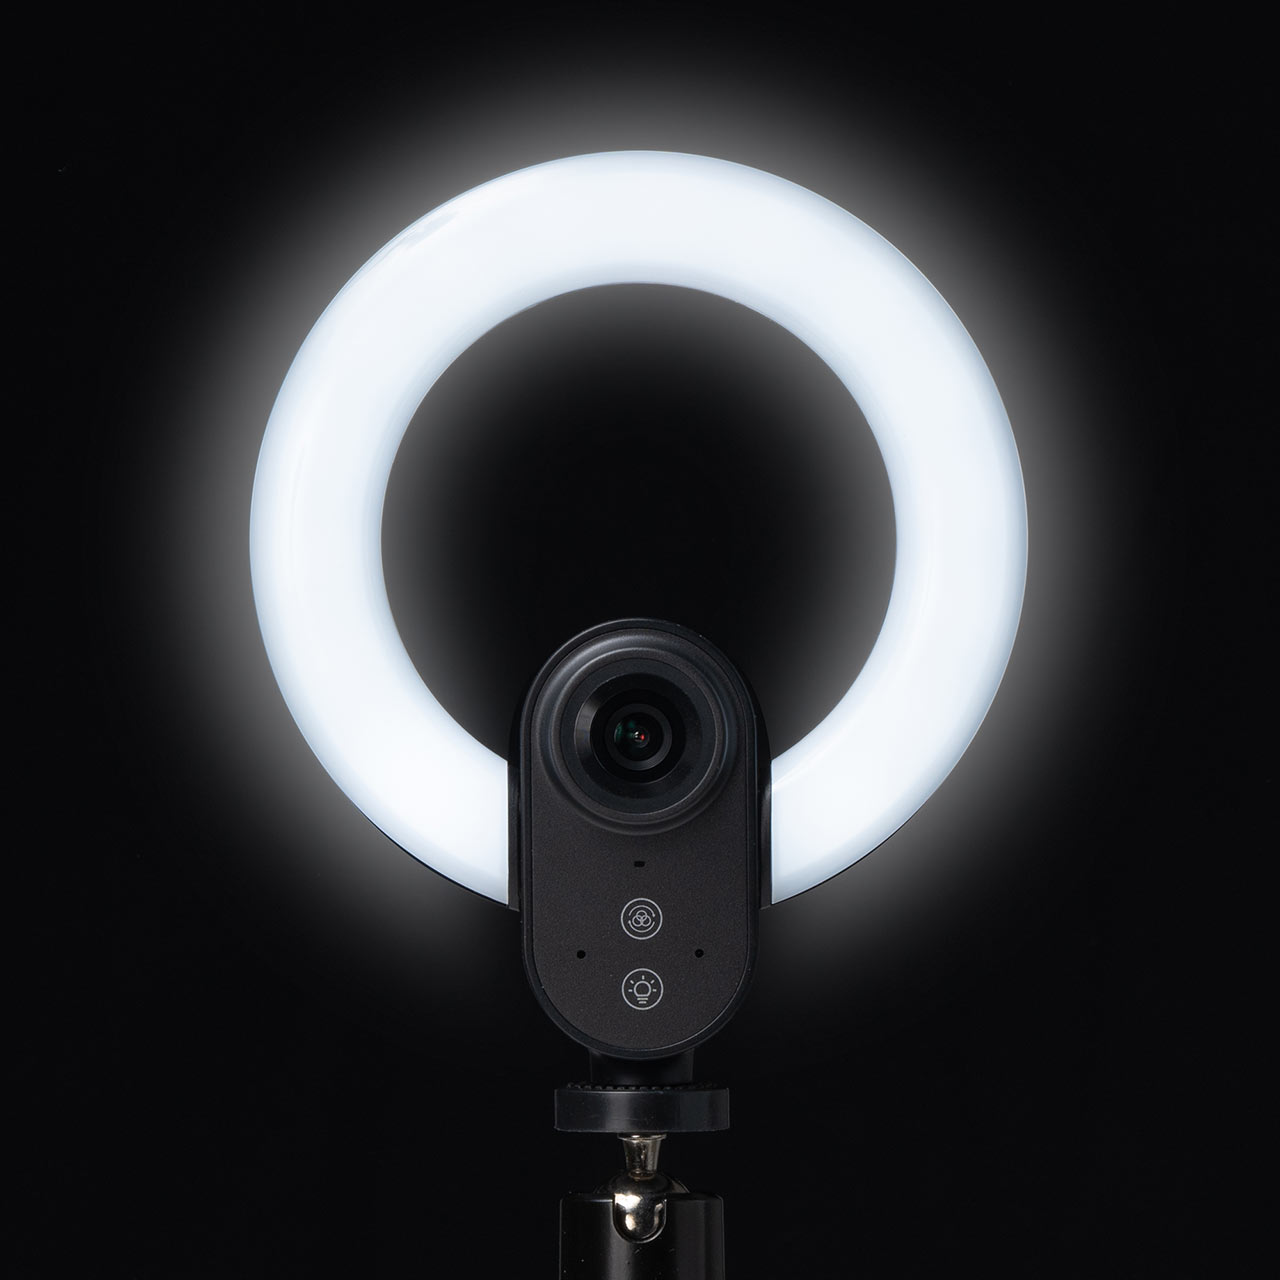 LEDリングライト付き WEBカメラ 1080p 3光色 画角84° オートフォーカス マイクなし スタンド付属 Zoom/Teams/Skypeなど対応 400-CAM100